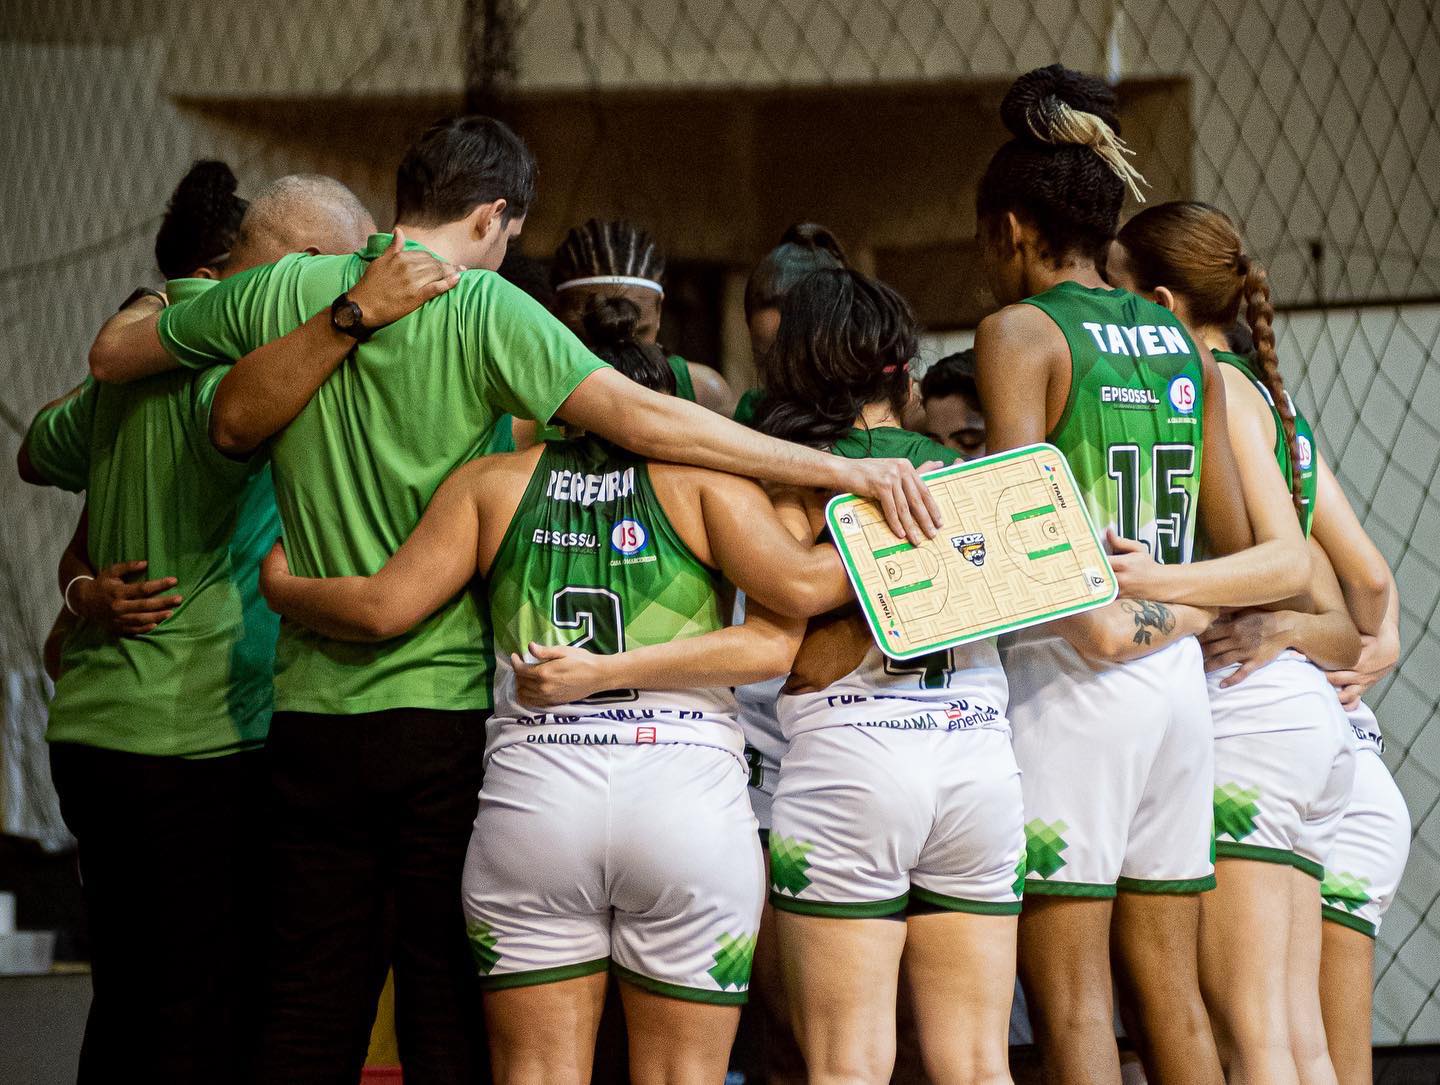 Definidos os campeões do Campeonato Brasileiro Interclubes Feminino de  Basquete 3x3 2022 - Databasket